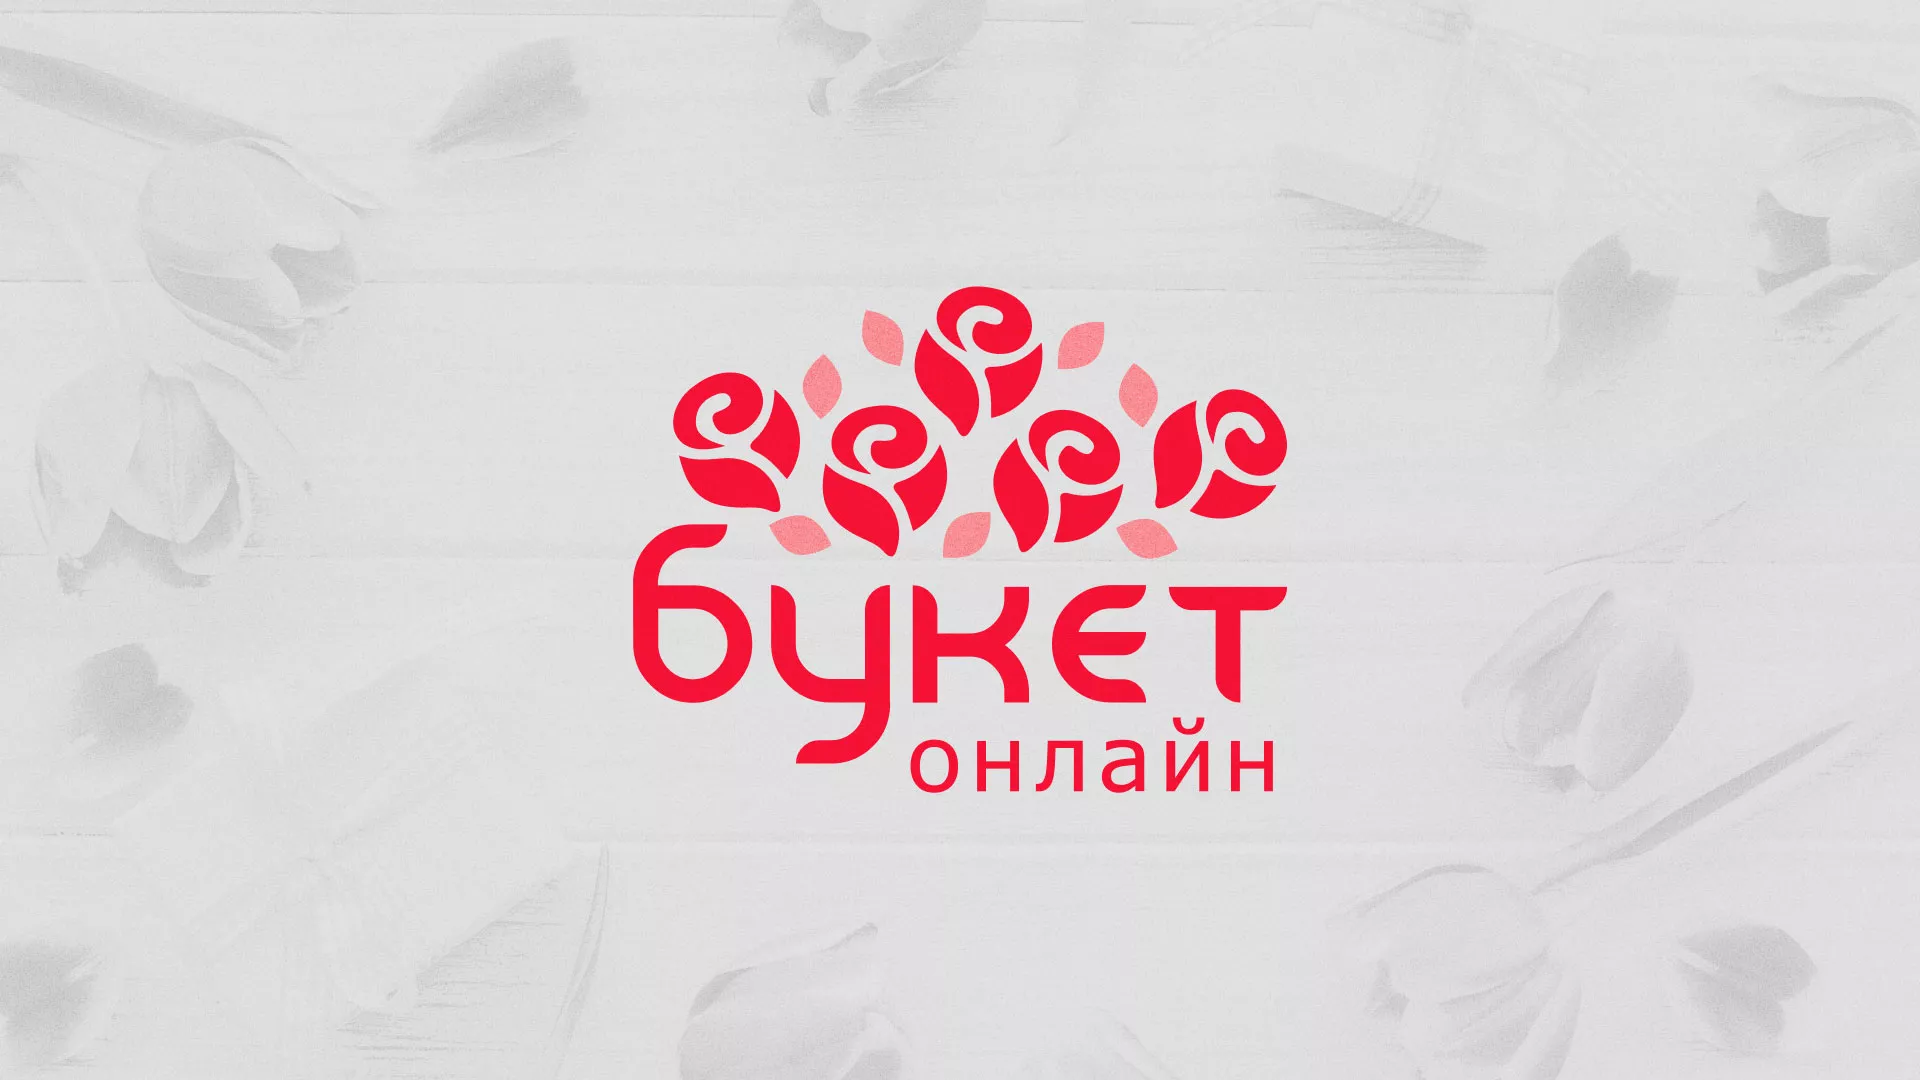 Создание интернет-магазина «Букет-онлайн» по цветам в Серафимовиче